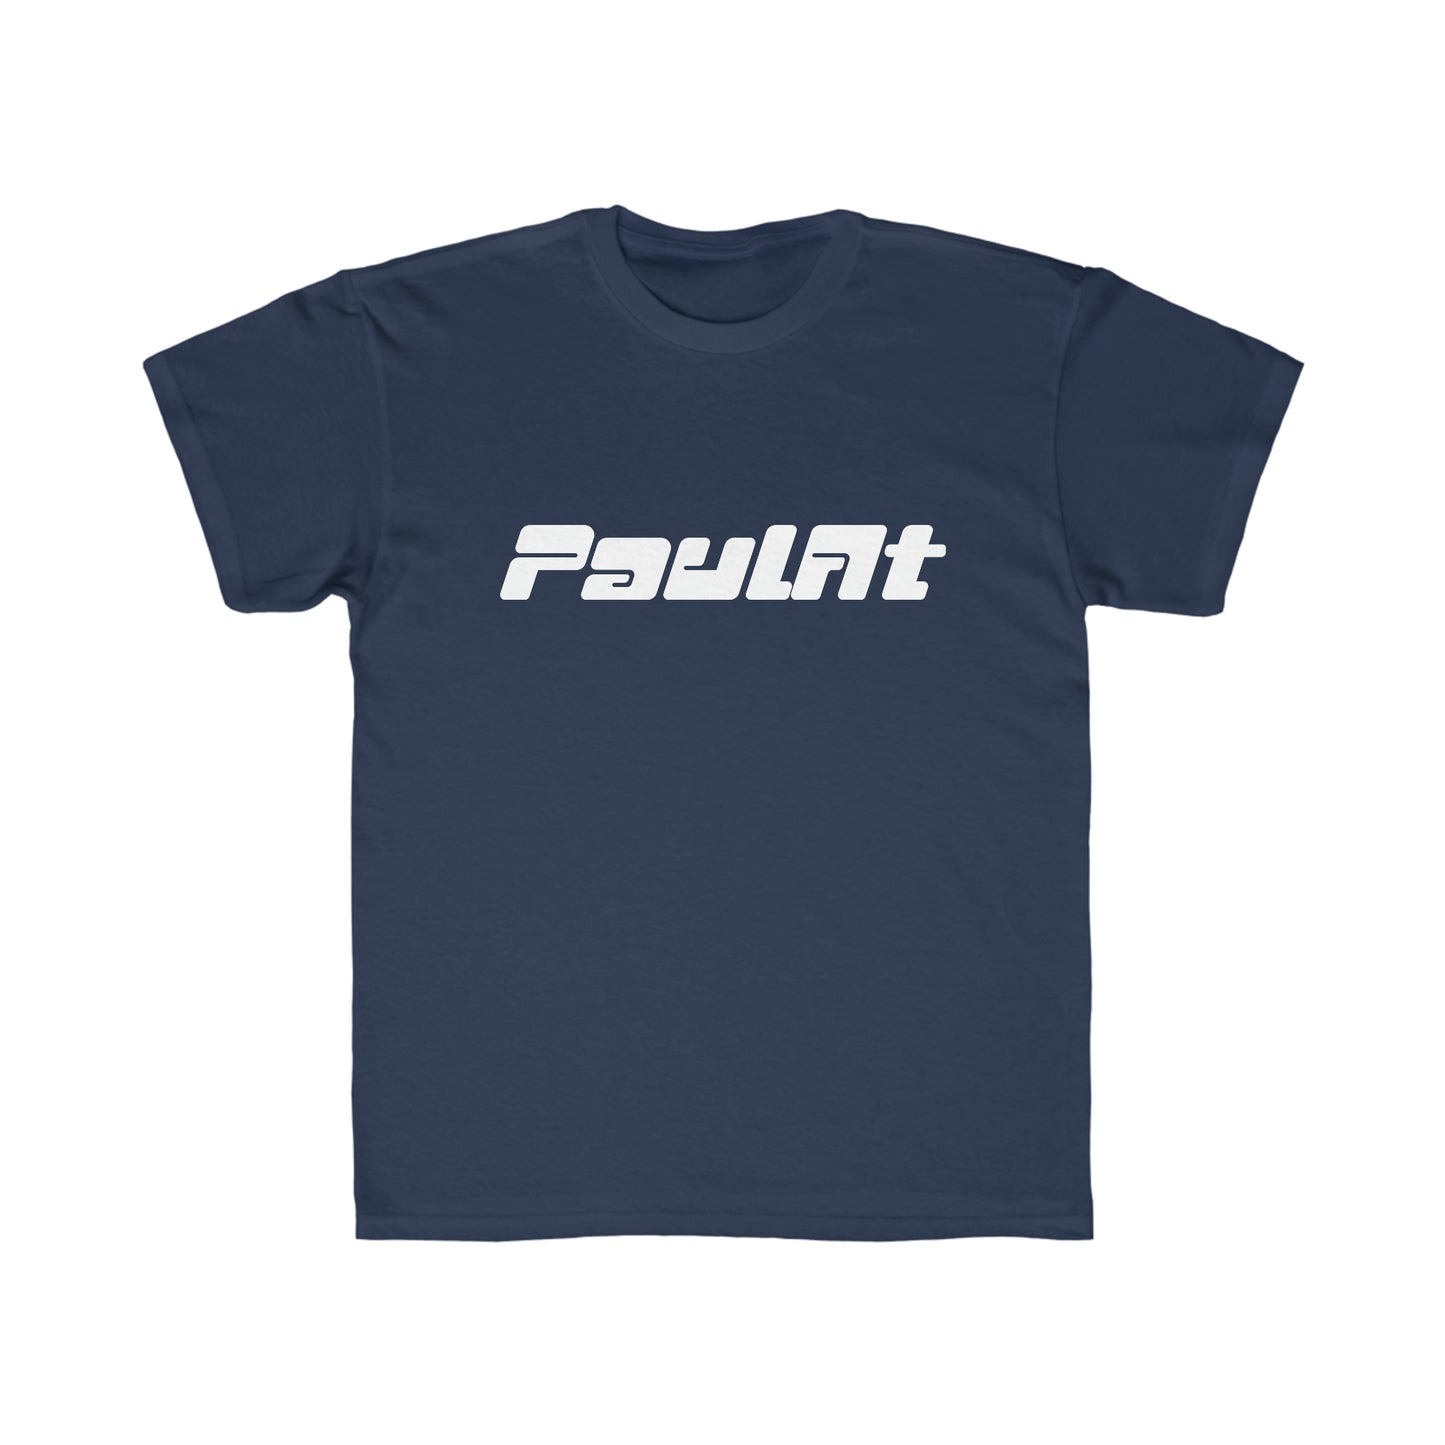 PaulAt White Logo Kids T-Shirt